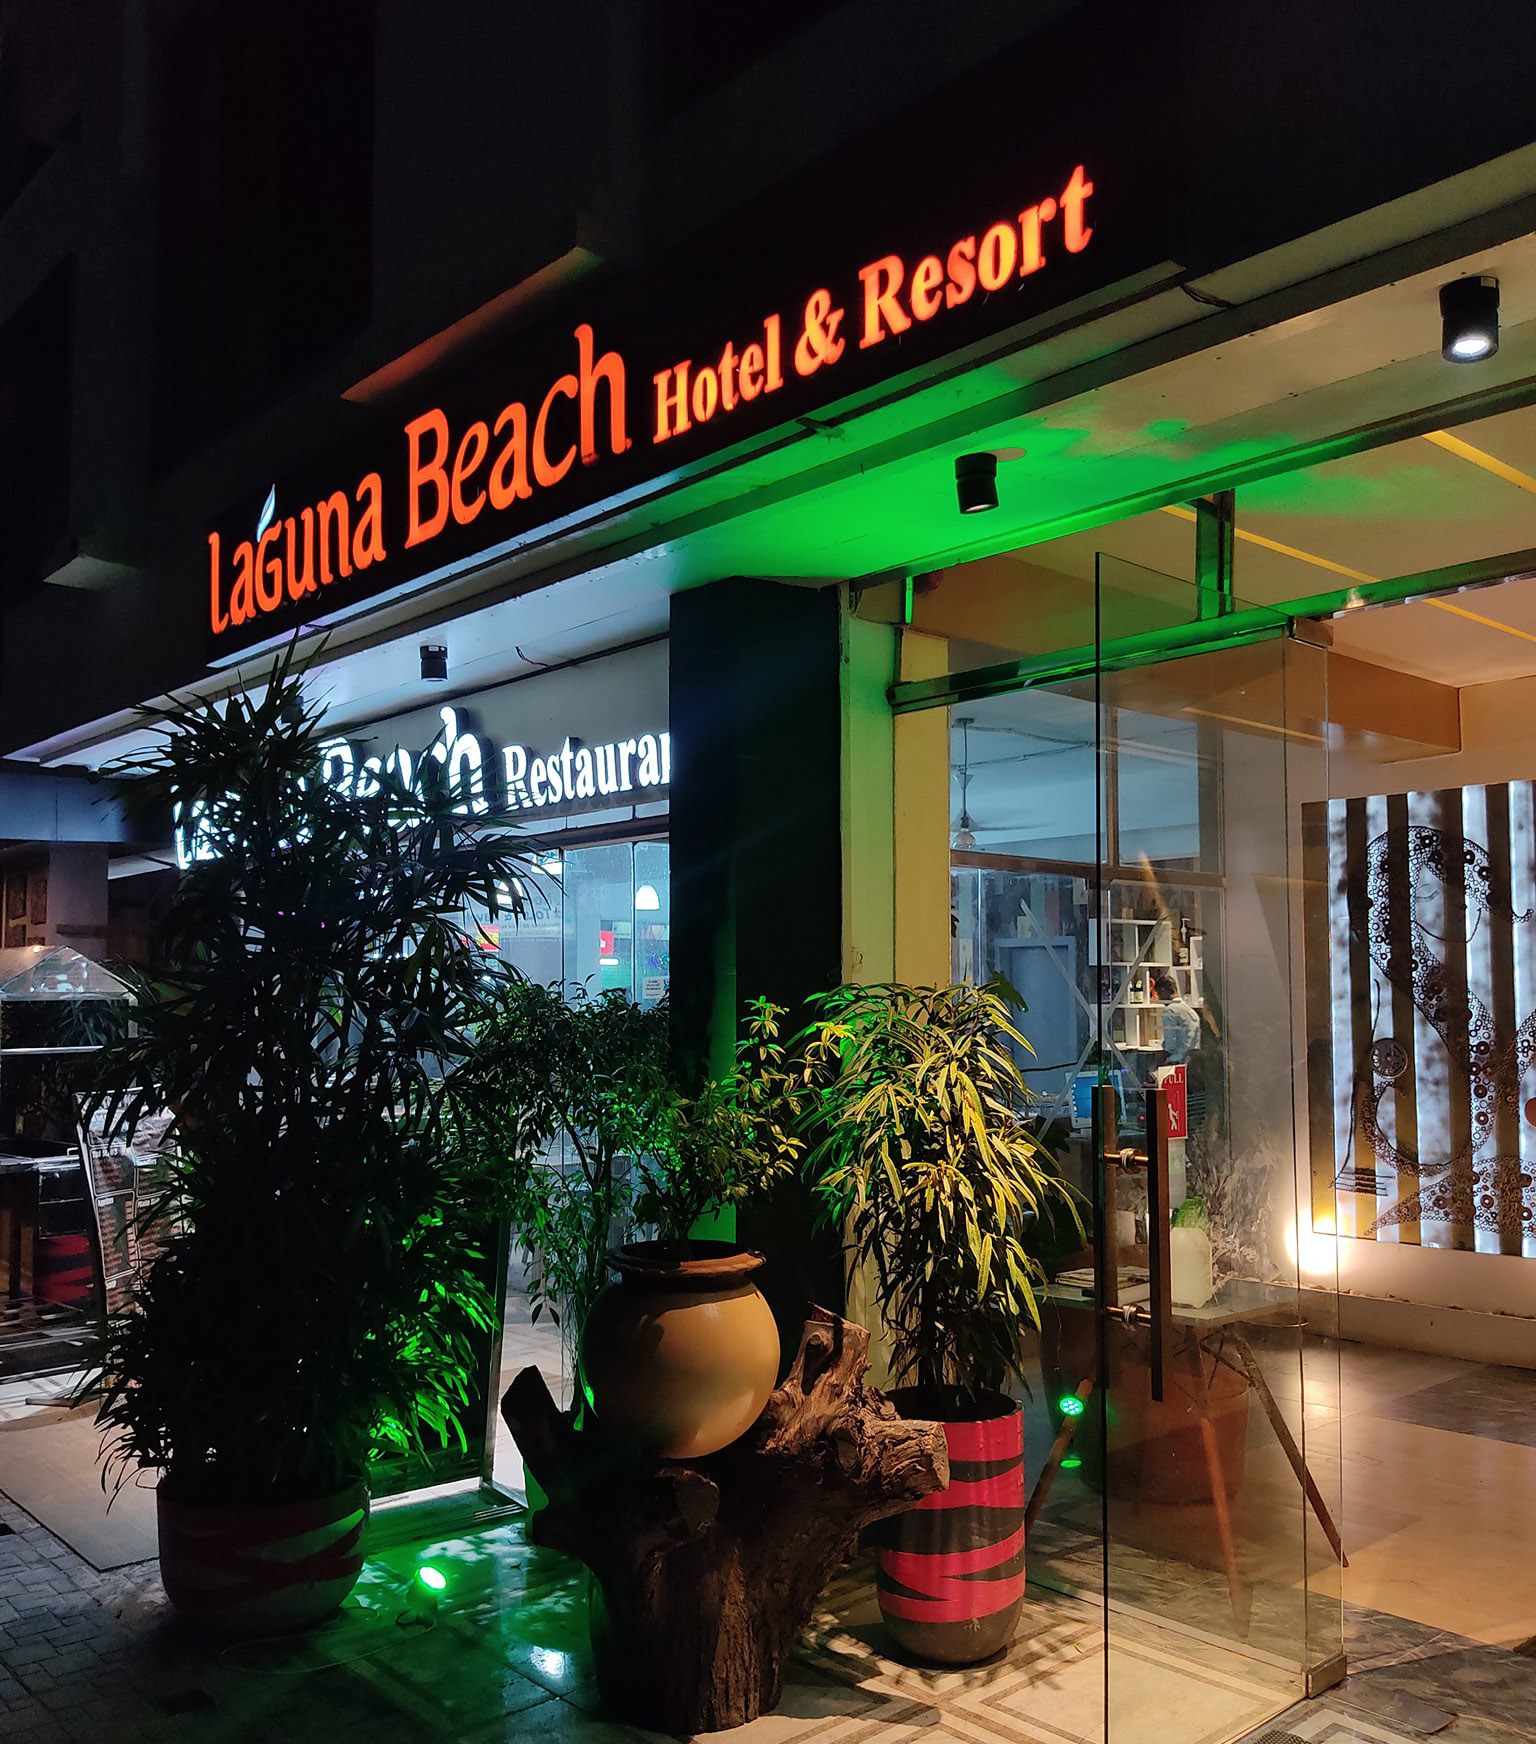 Laguna Beach Hotel   Resort Lugunajpg 75f52bbf 79a6 4c43 892c 0b39bf3990fb1642798897 